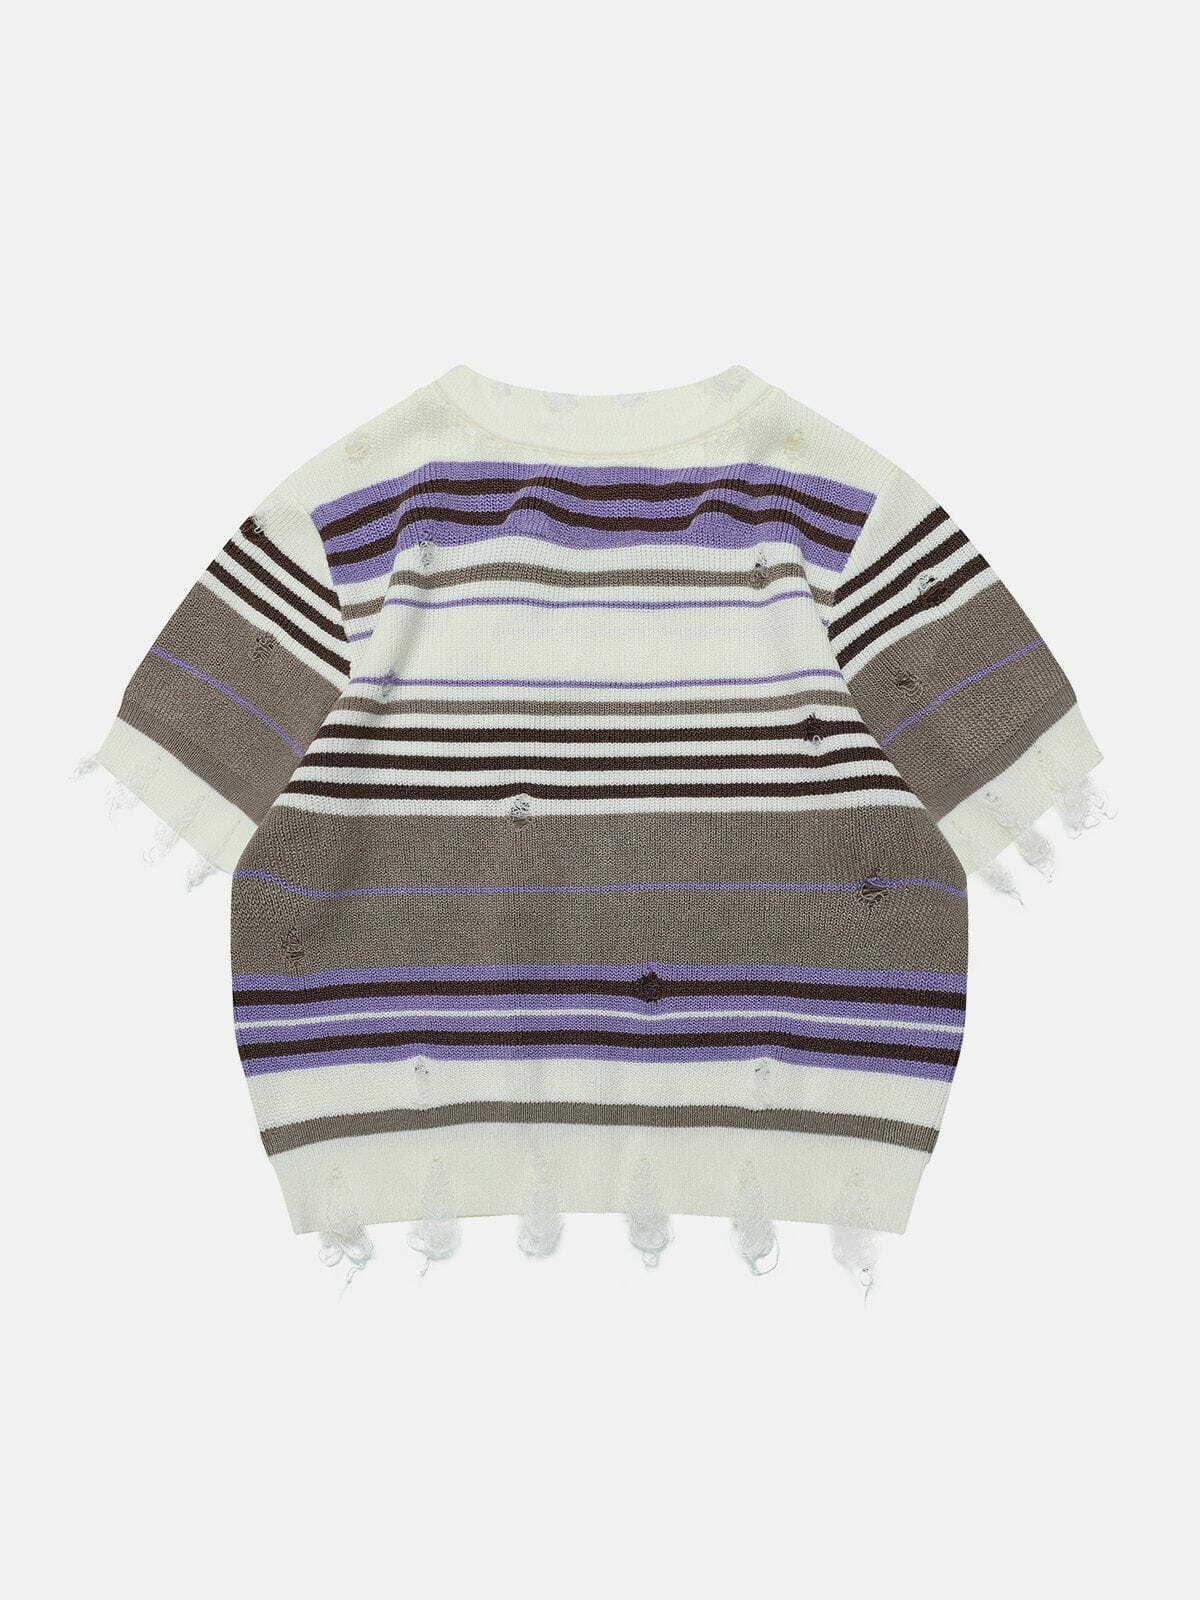 revolutionary striped knit tee edgy y2k streetwear 1209